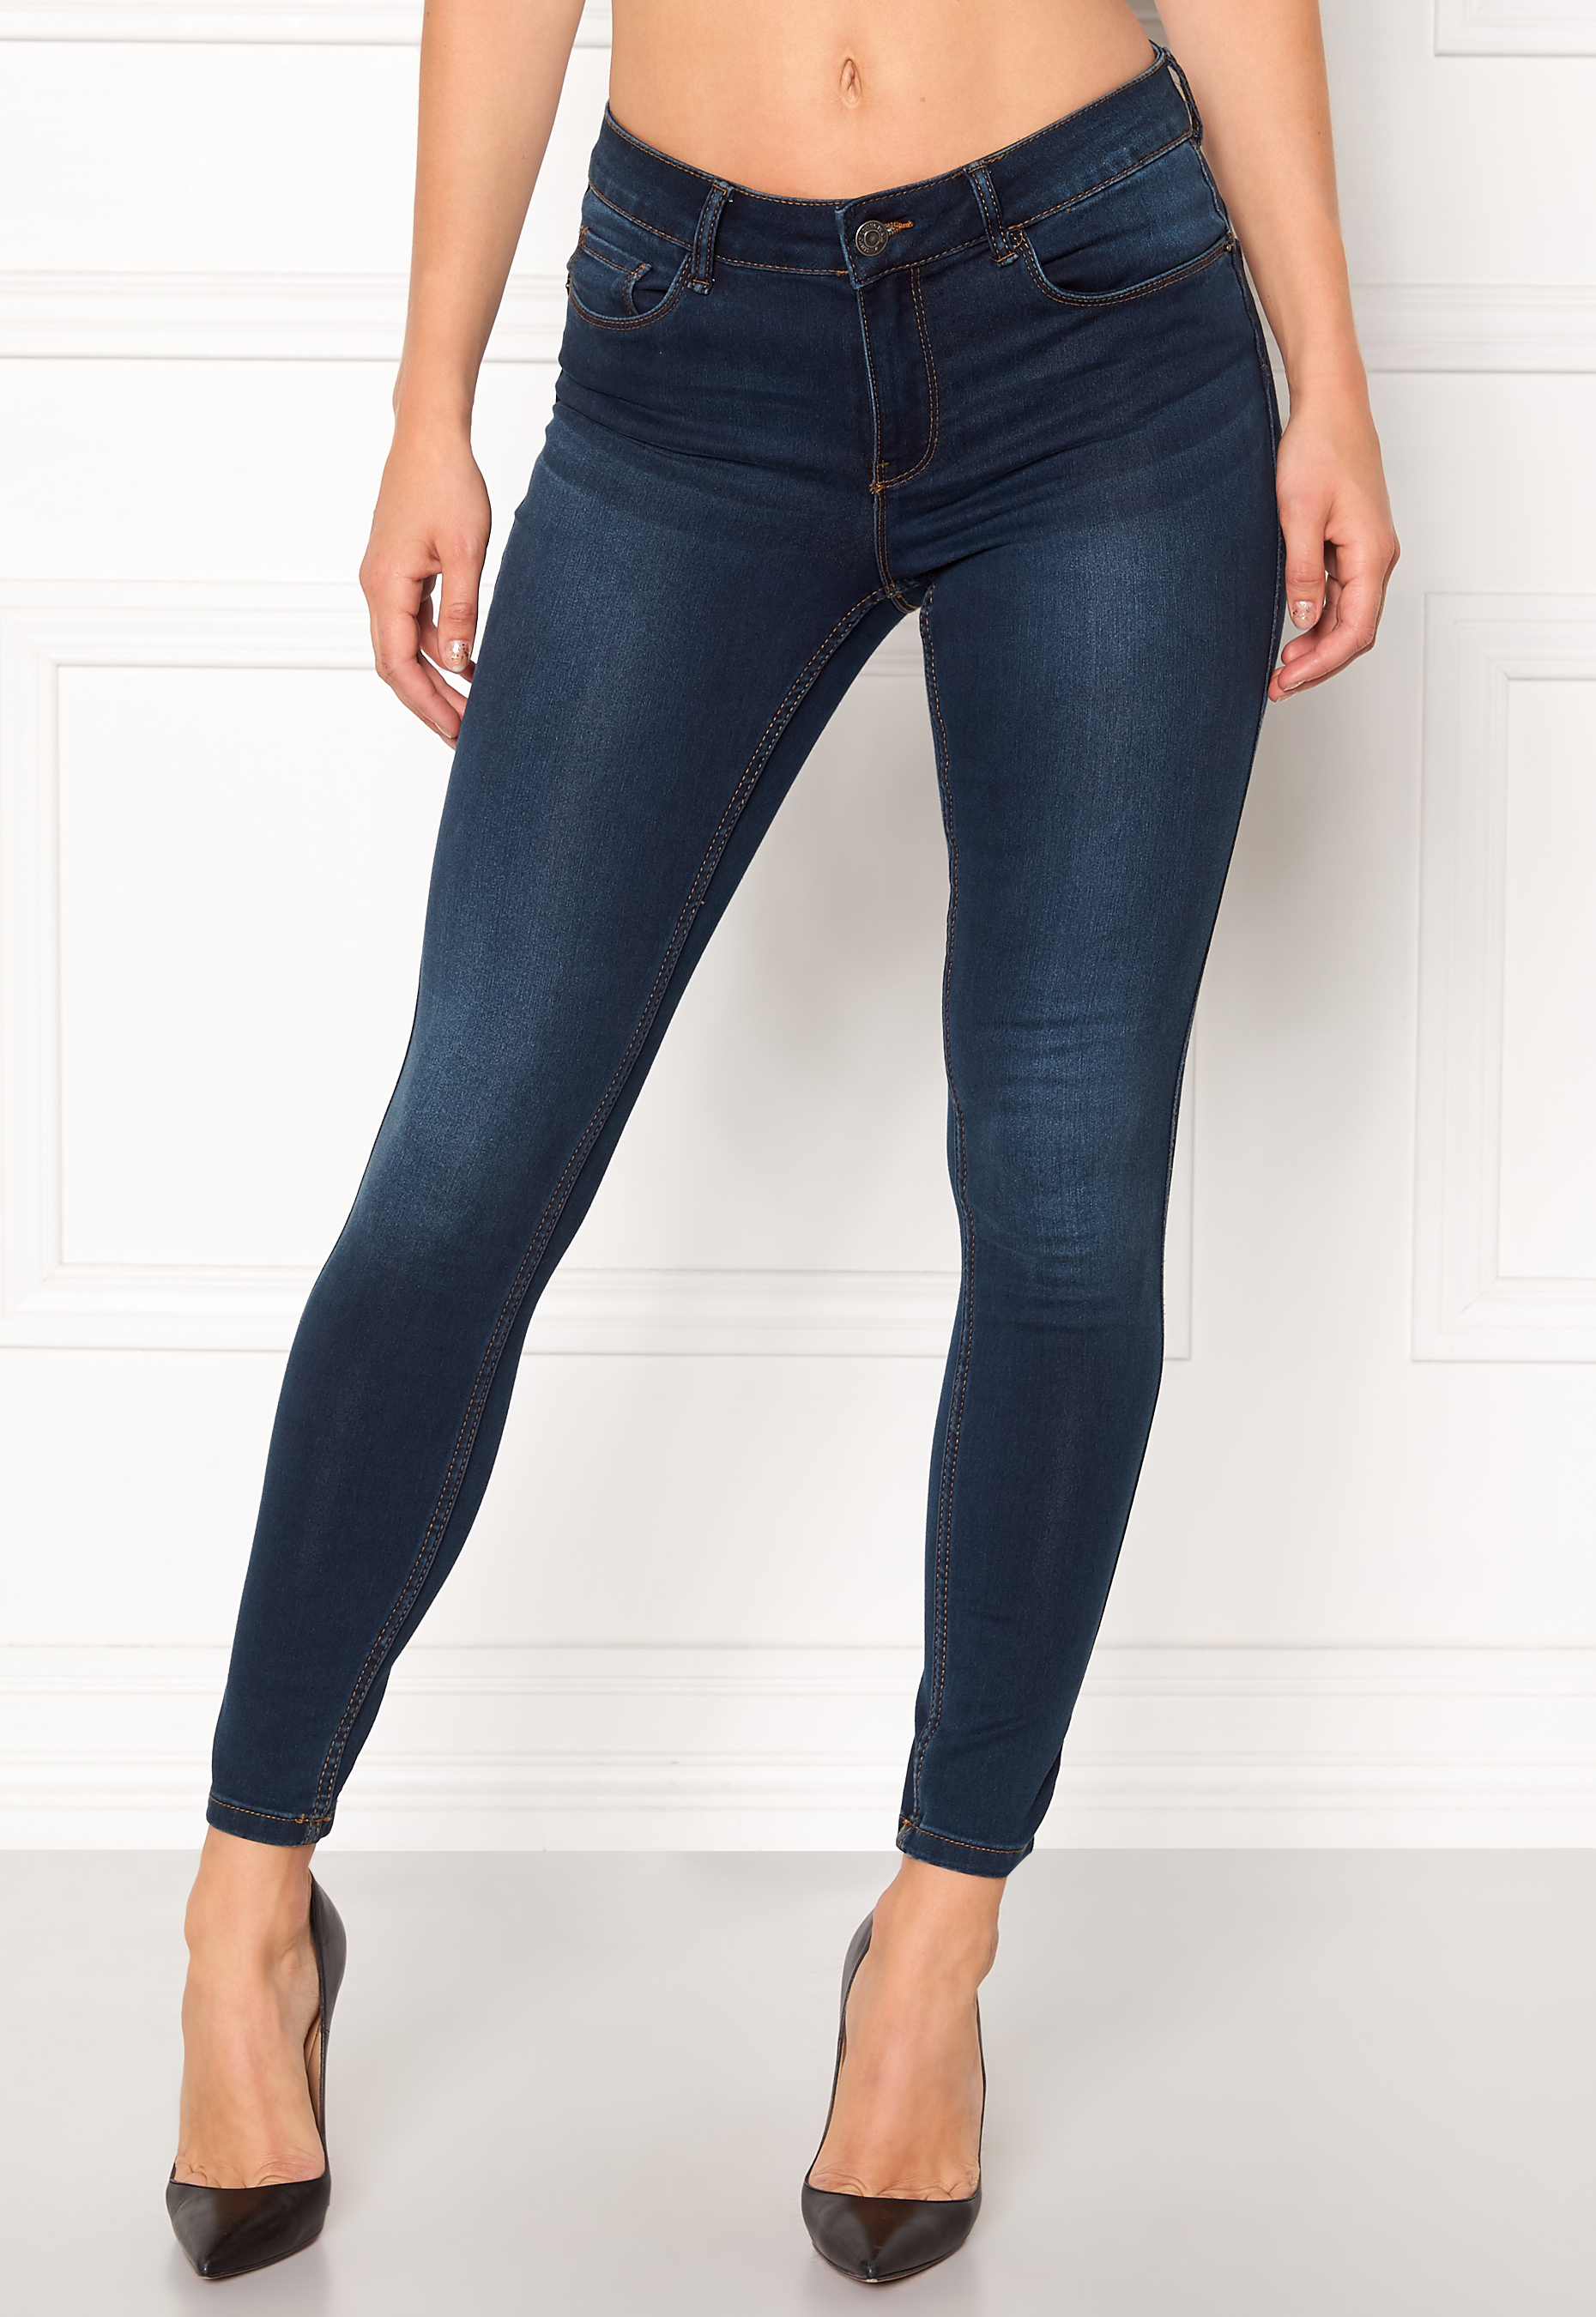 besked udlejeren Proportional Vero Moda Seven Shape Up Jeans Czech Republic, SAVE 41% - beleco.es